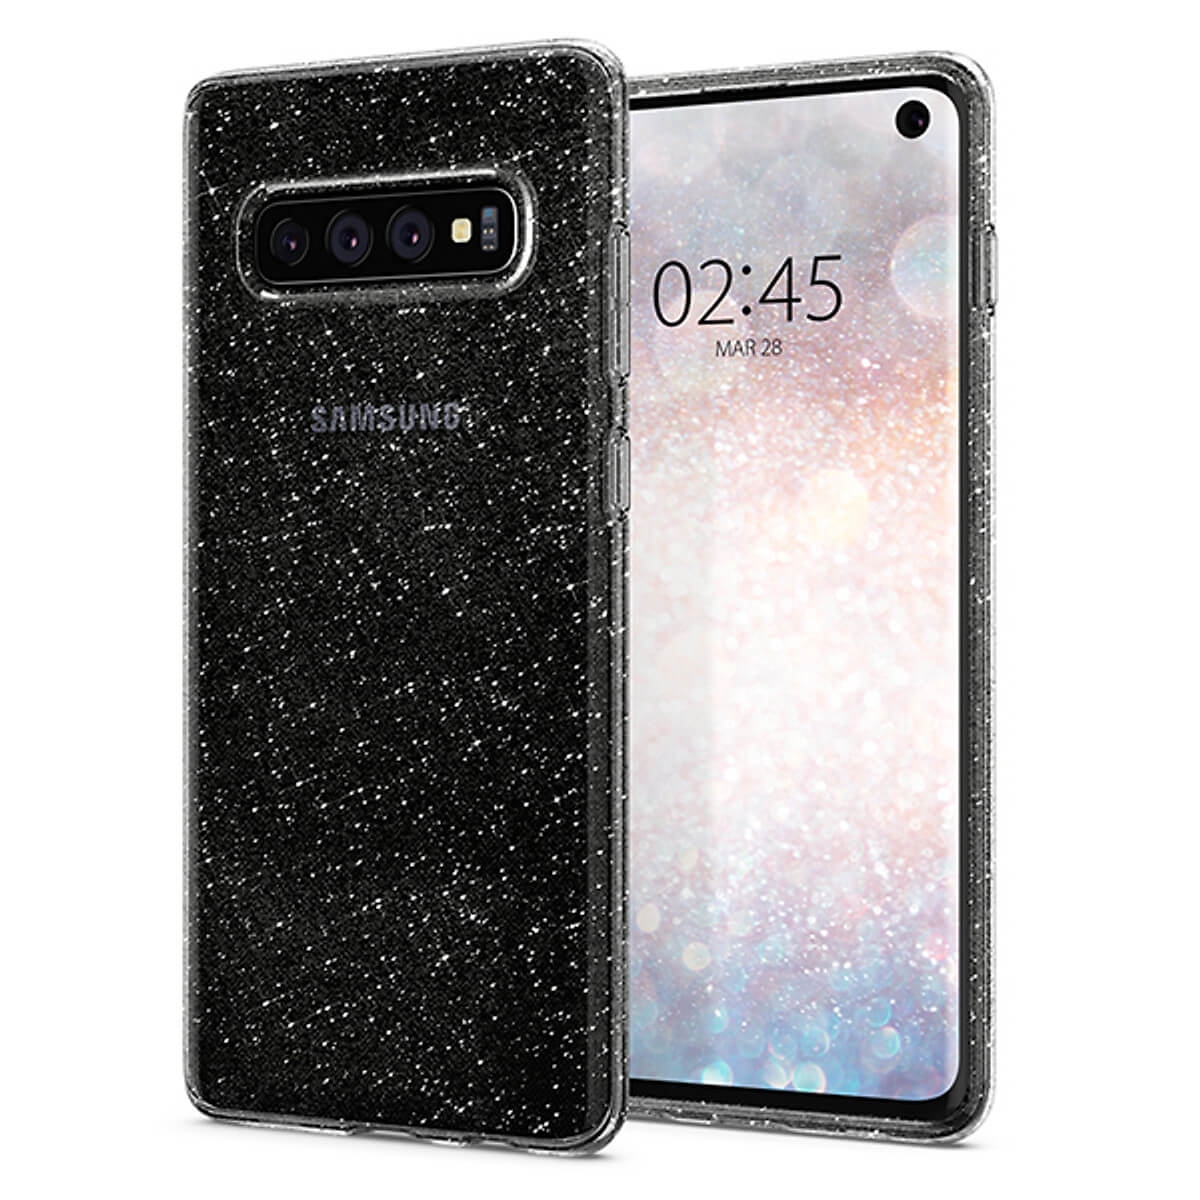 Spigen Galaxy S10 Case Liquid Crystal Glitter Crystal Quartz